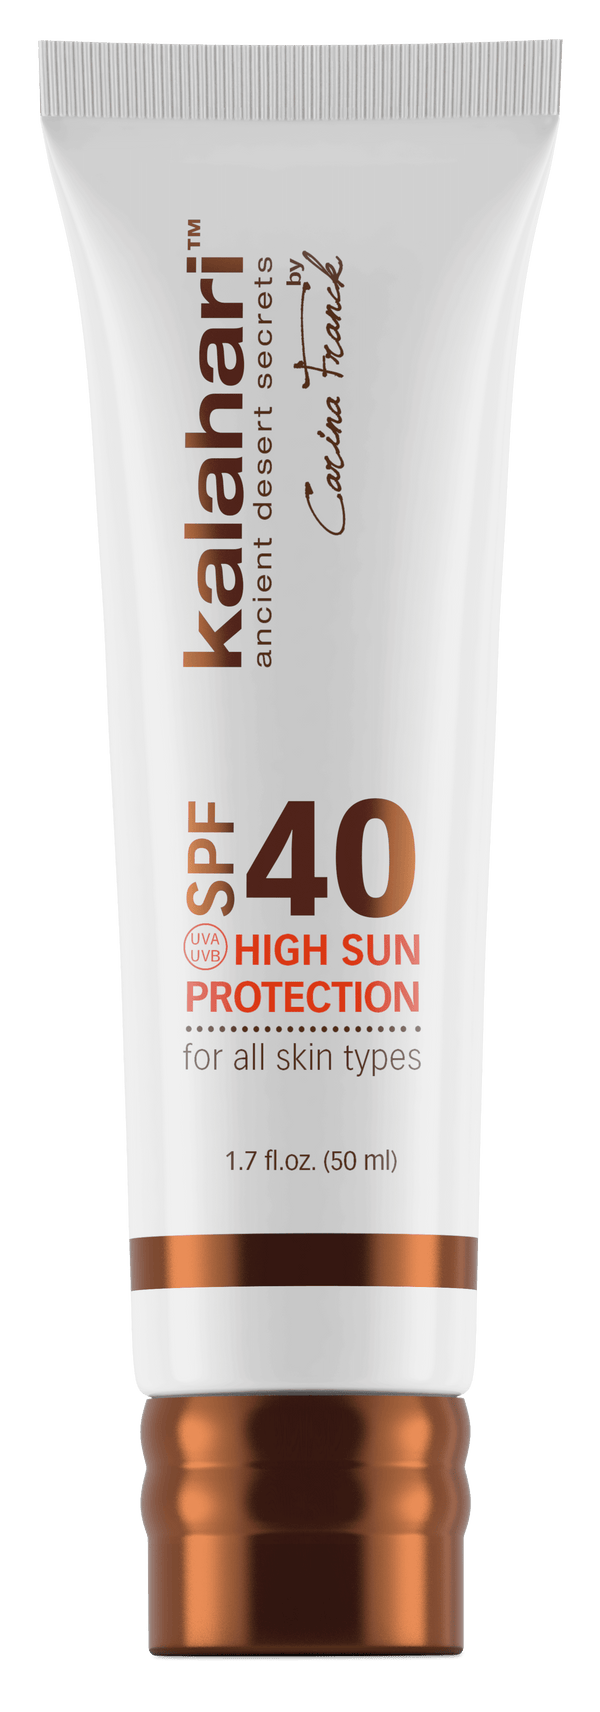 Spf 40 sun protection